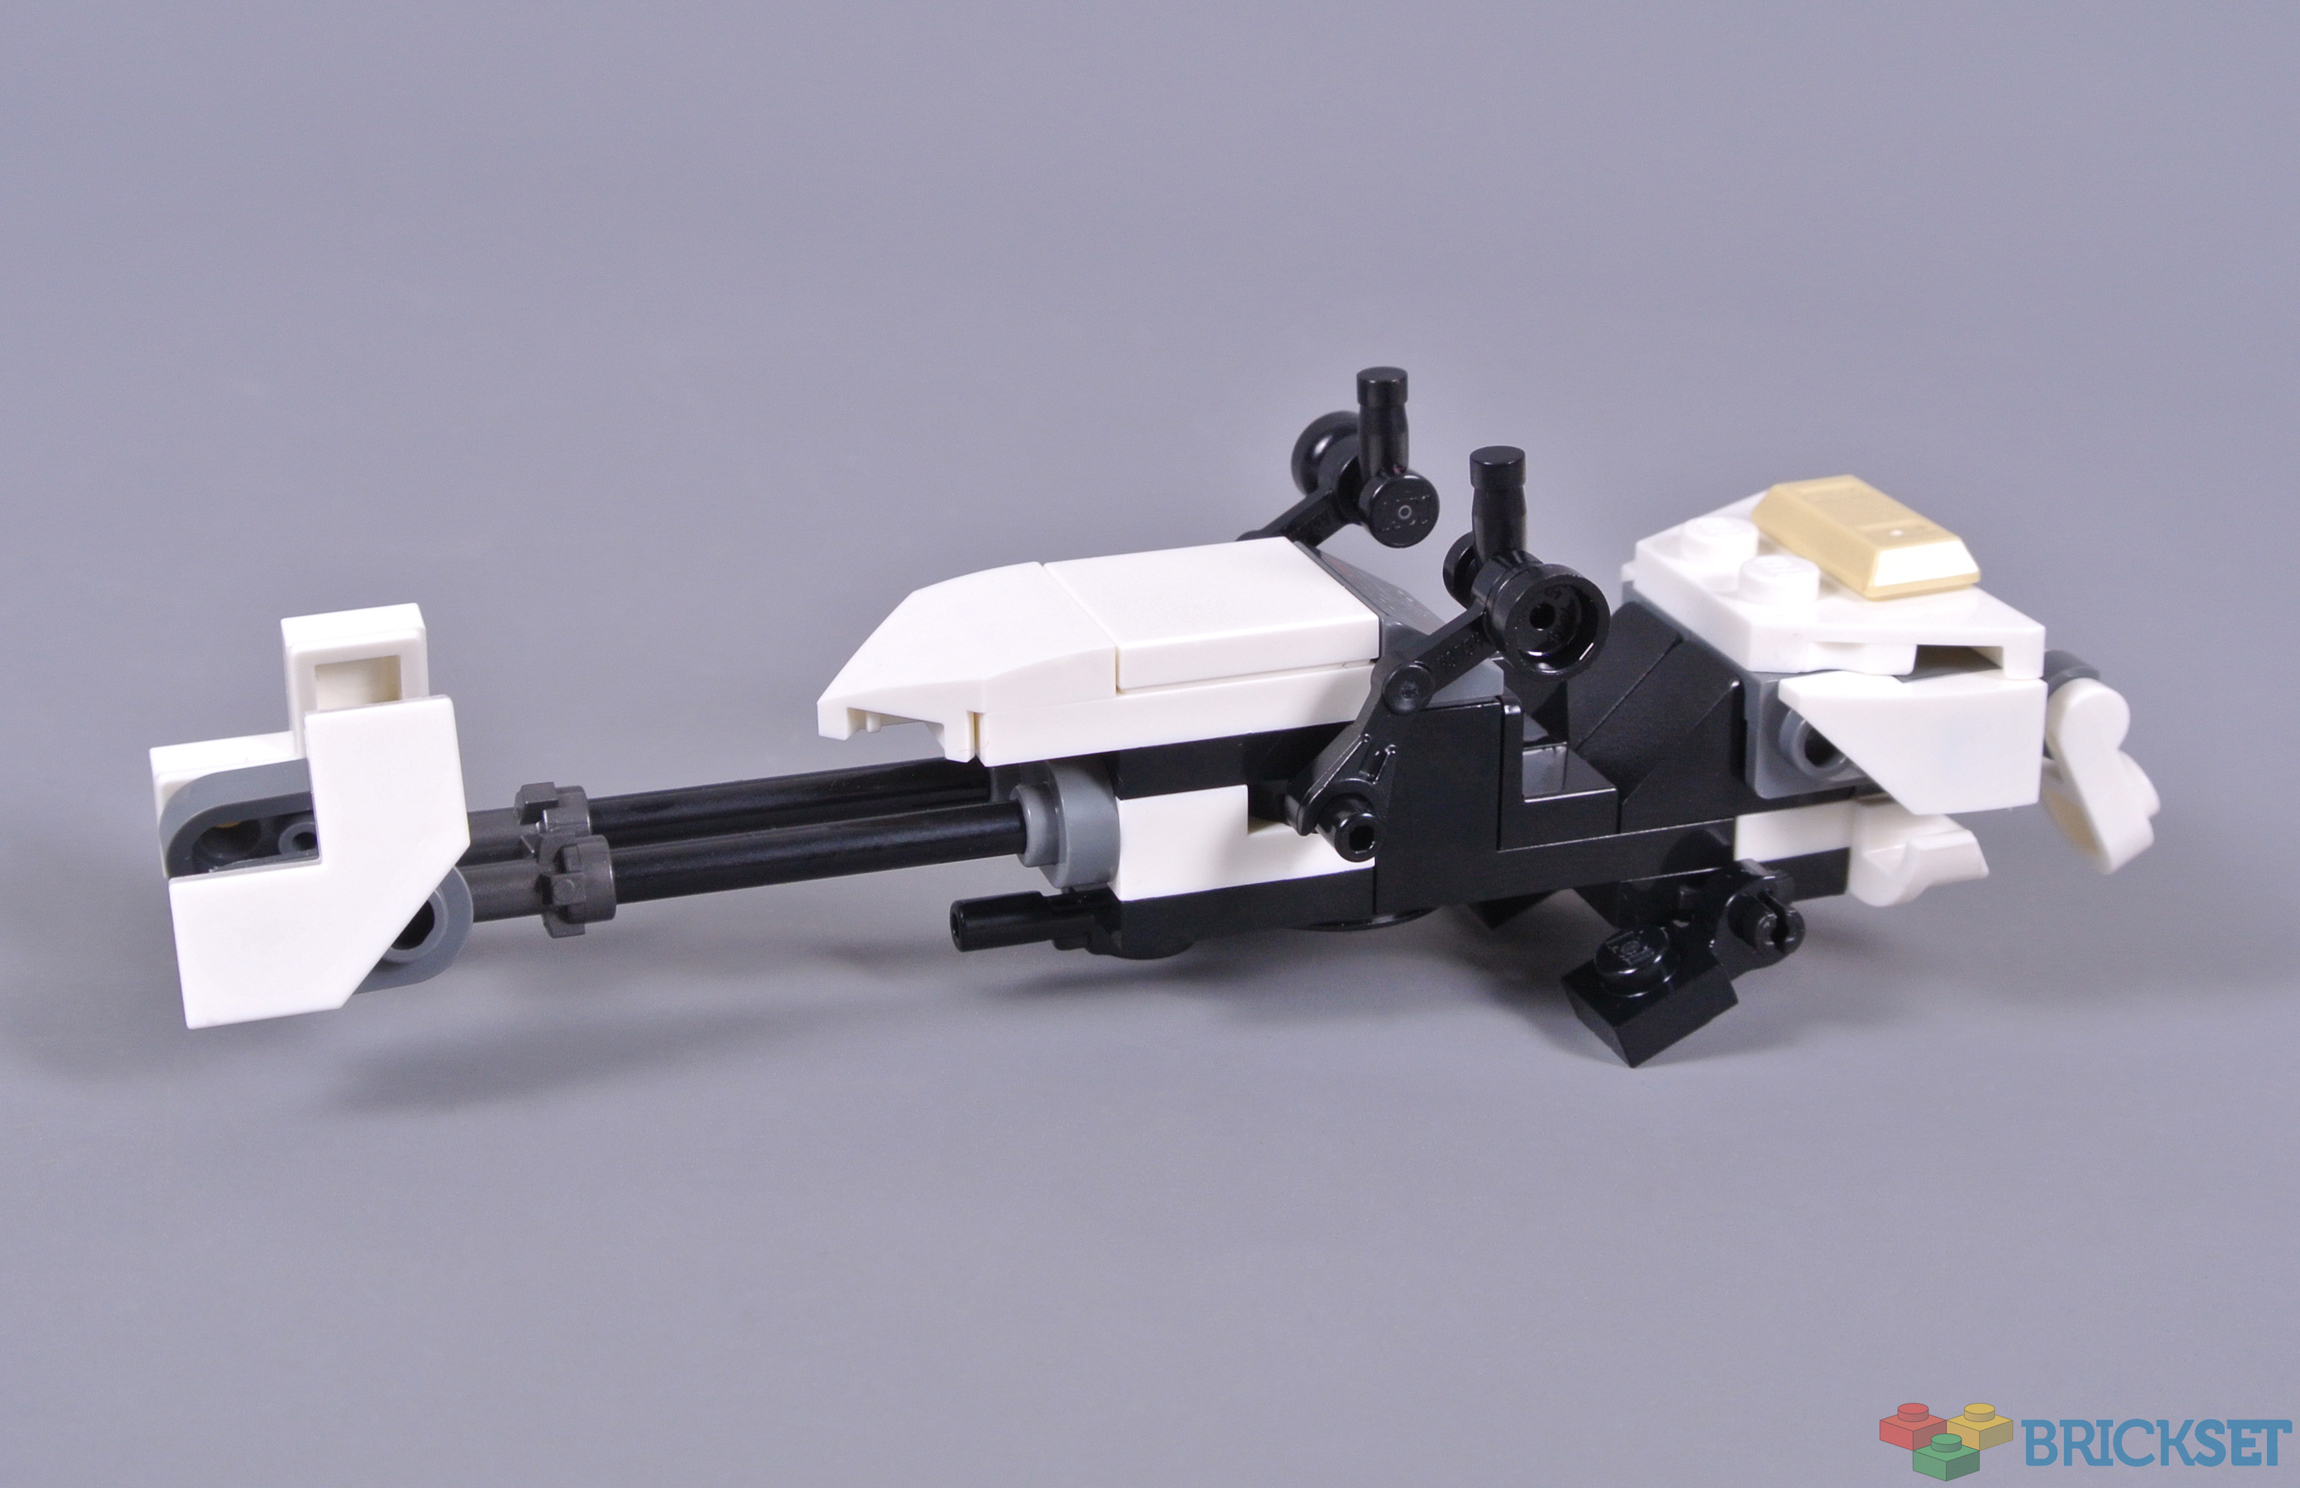 LEGO 75320 Snowtrooper Battle Pack review